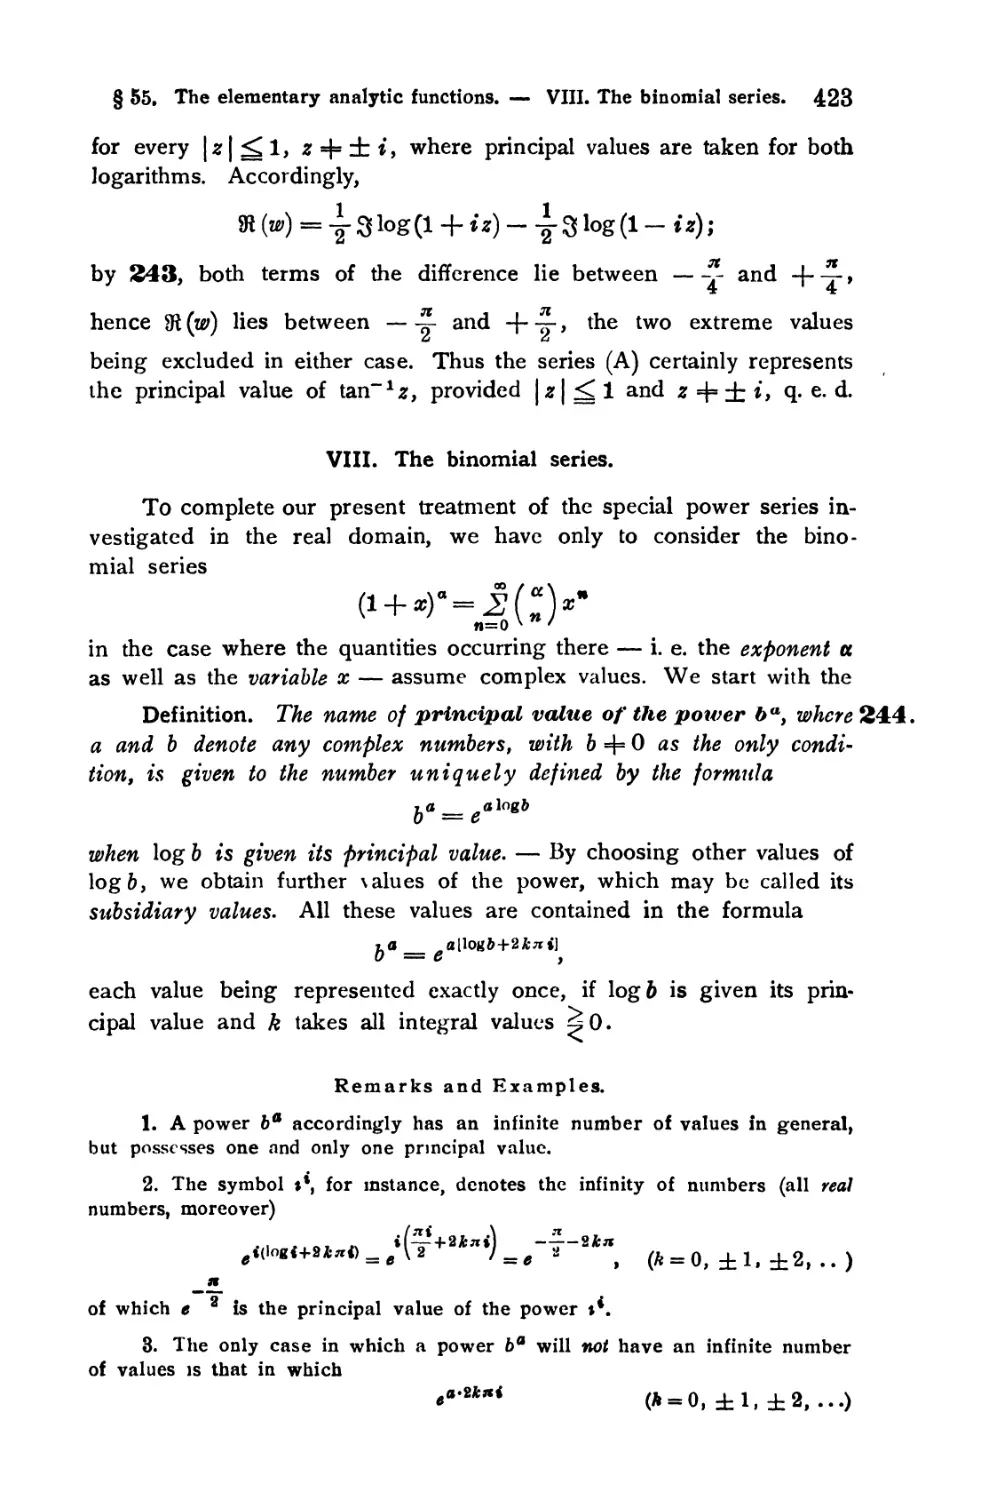 VIII. The binomial series